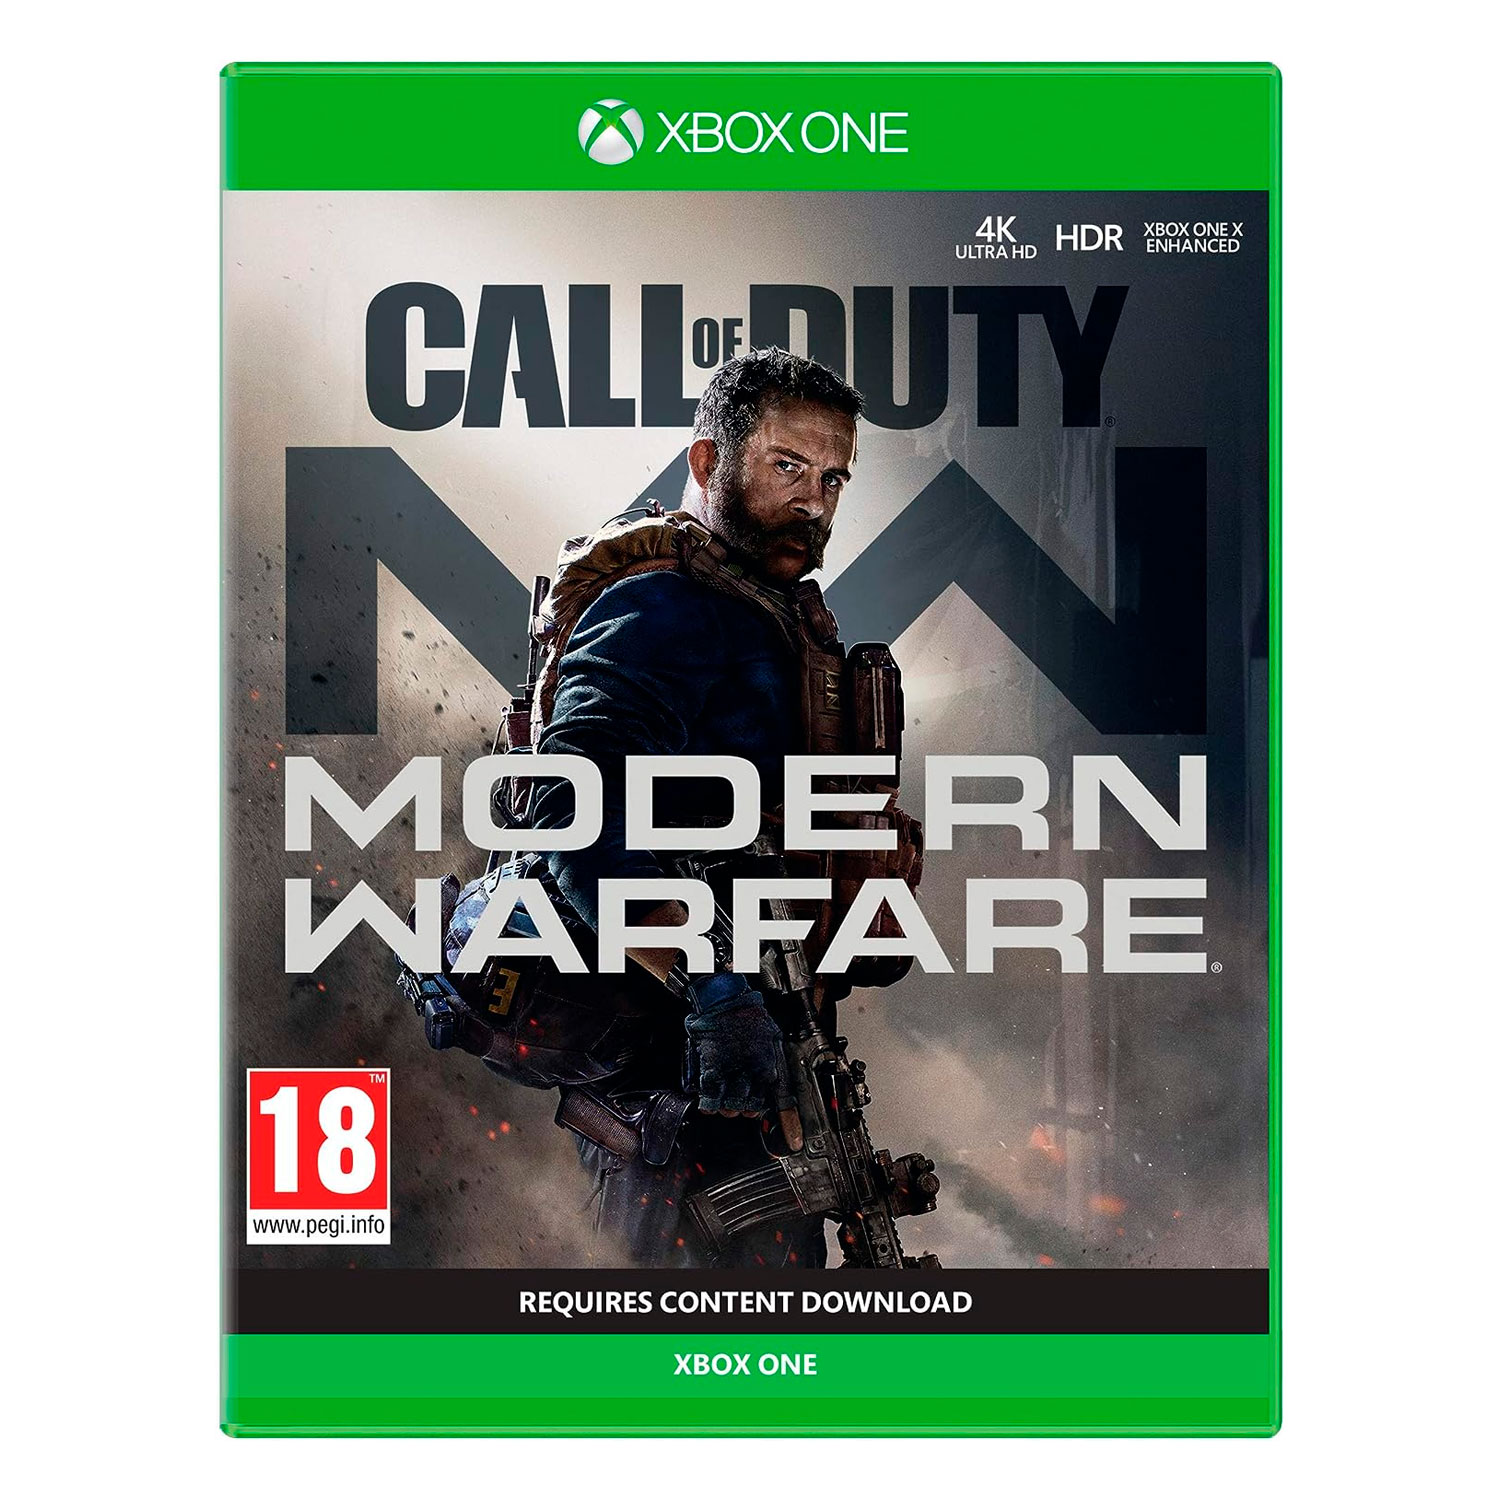 Jogo Call of Duty Modern Warfare II - Ps4 - Mariio85